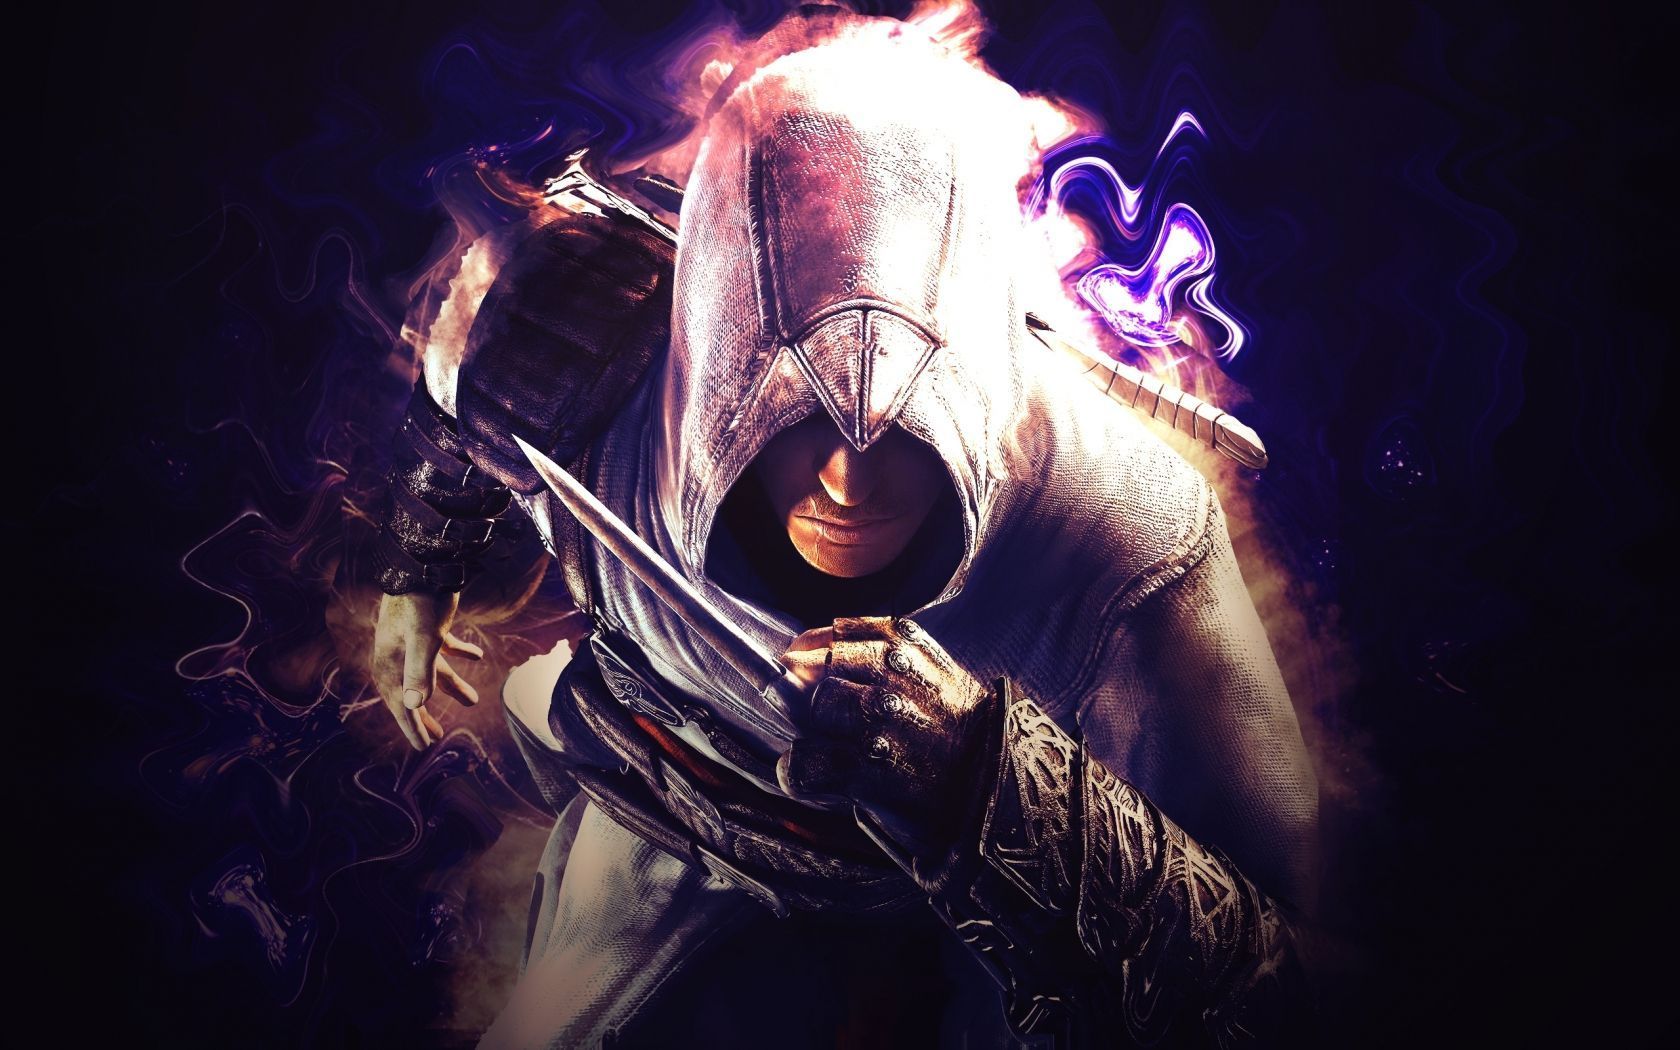 Assassin's Creed - The Assassin's Wallpaper (32617401) - Fanpop